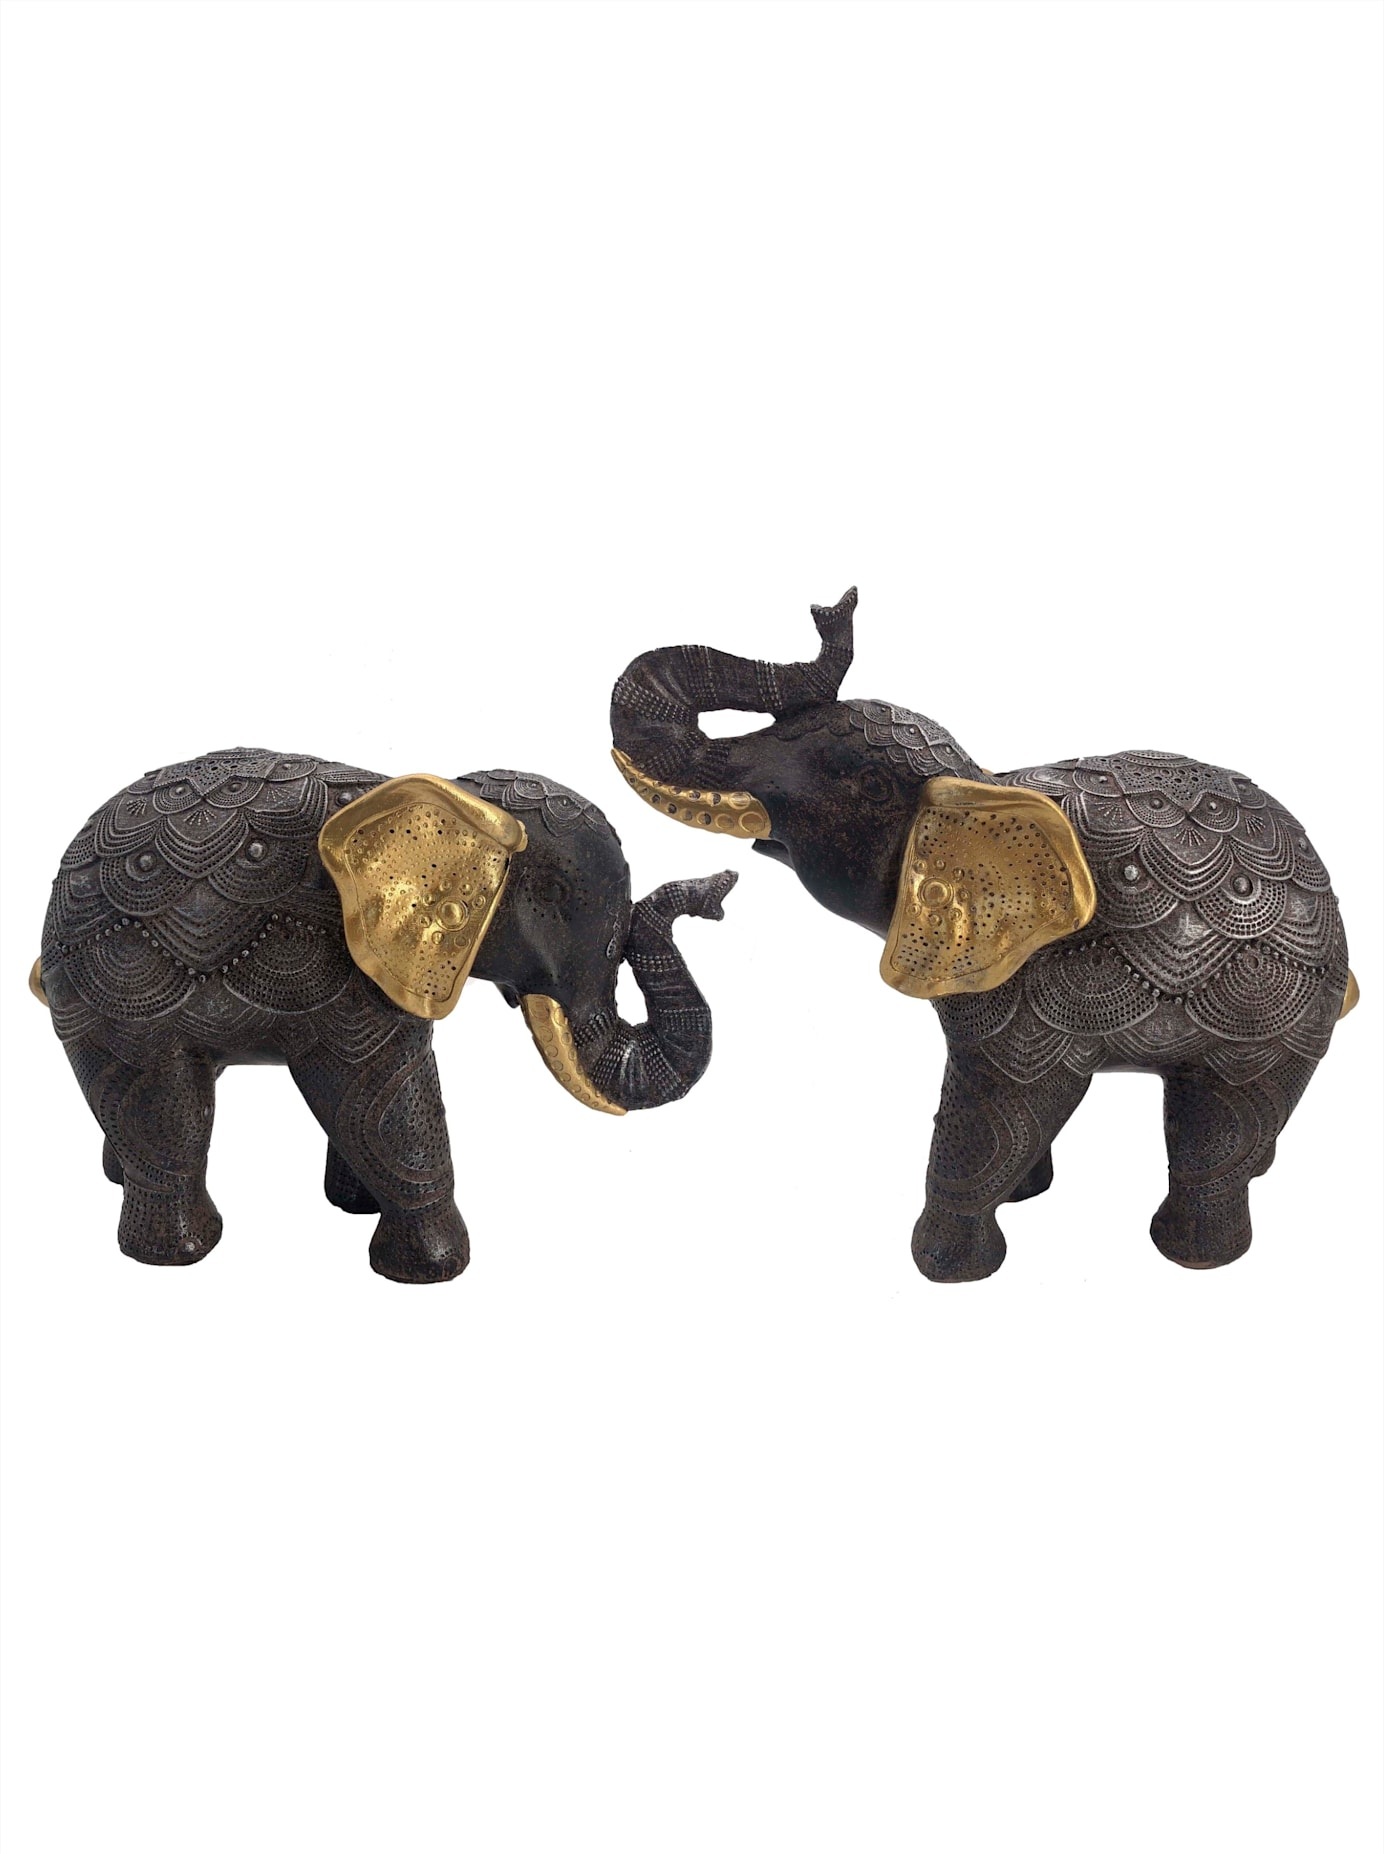 heine home Deko-Figur Elefant, 2 tlg. Set | BAUR